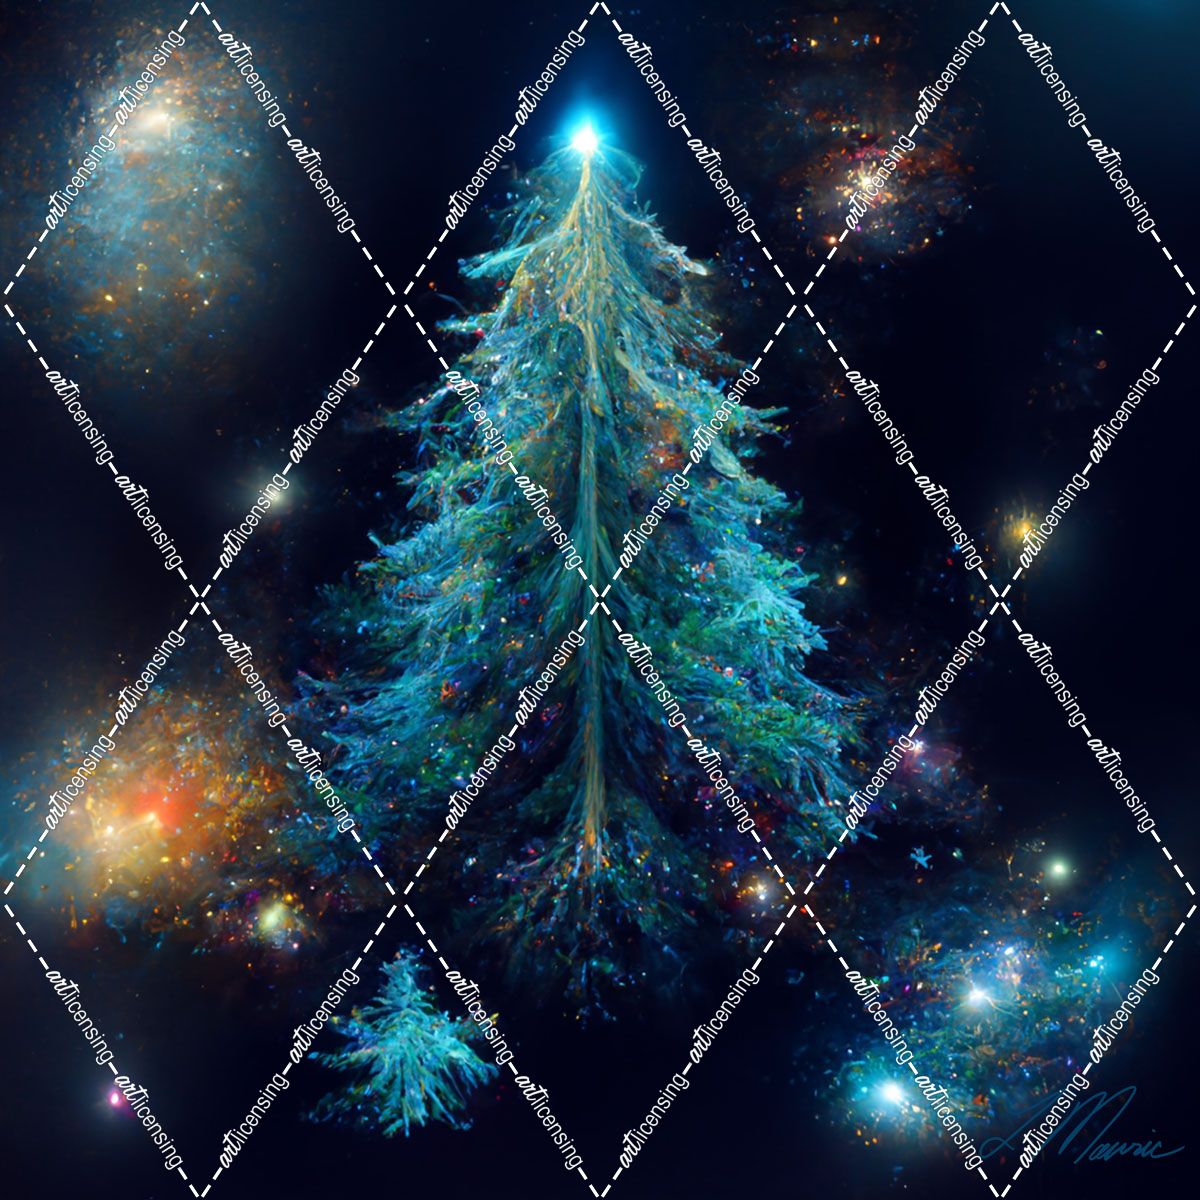 Christmas Tree 3